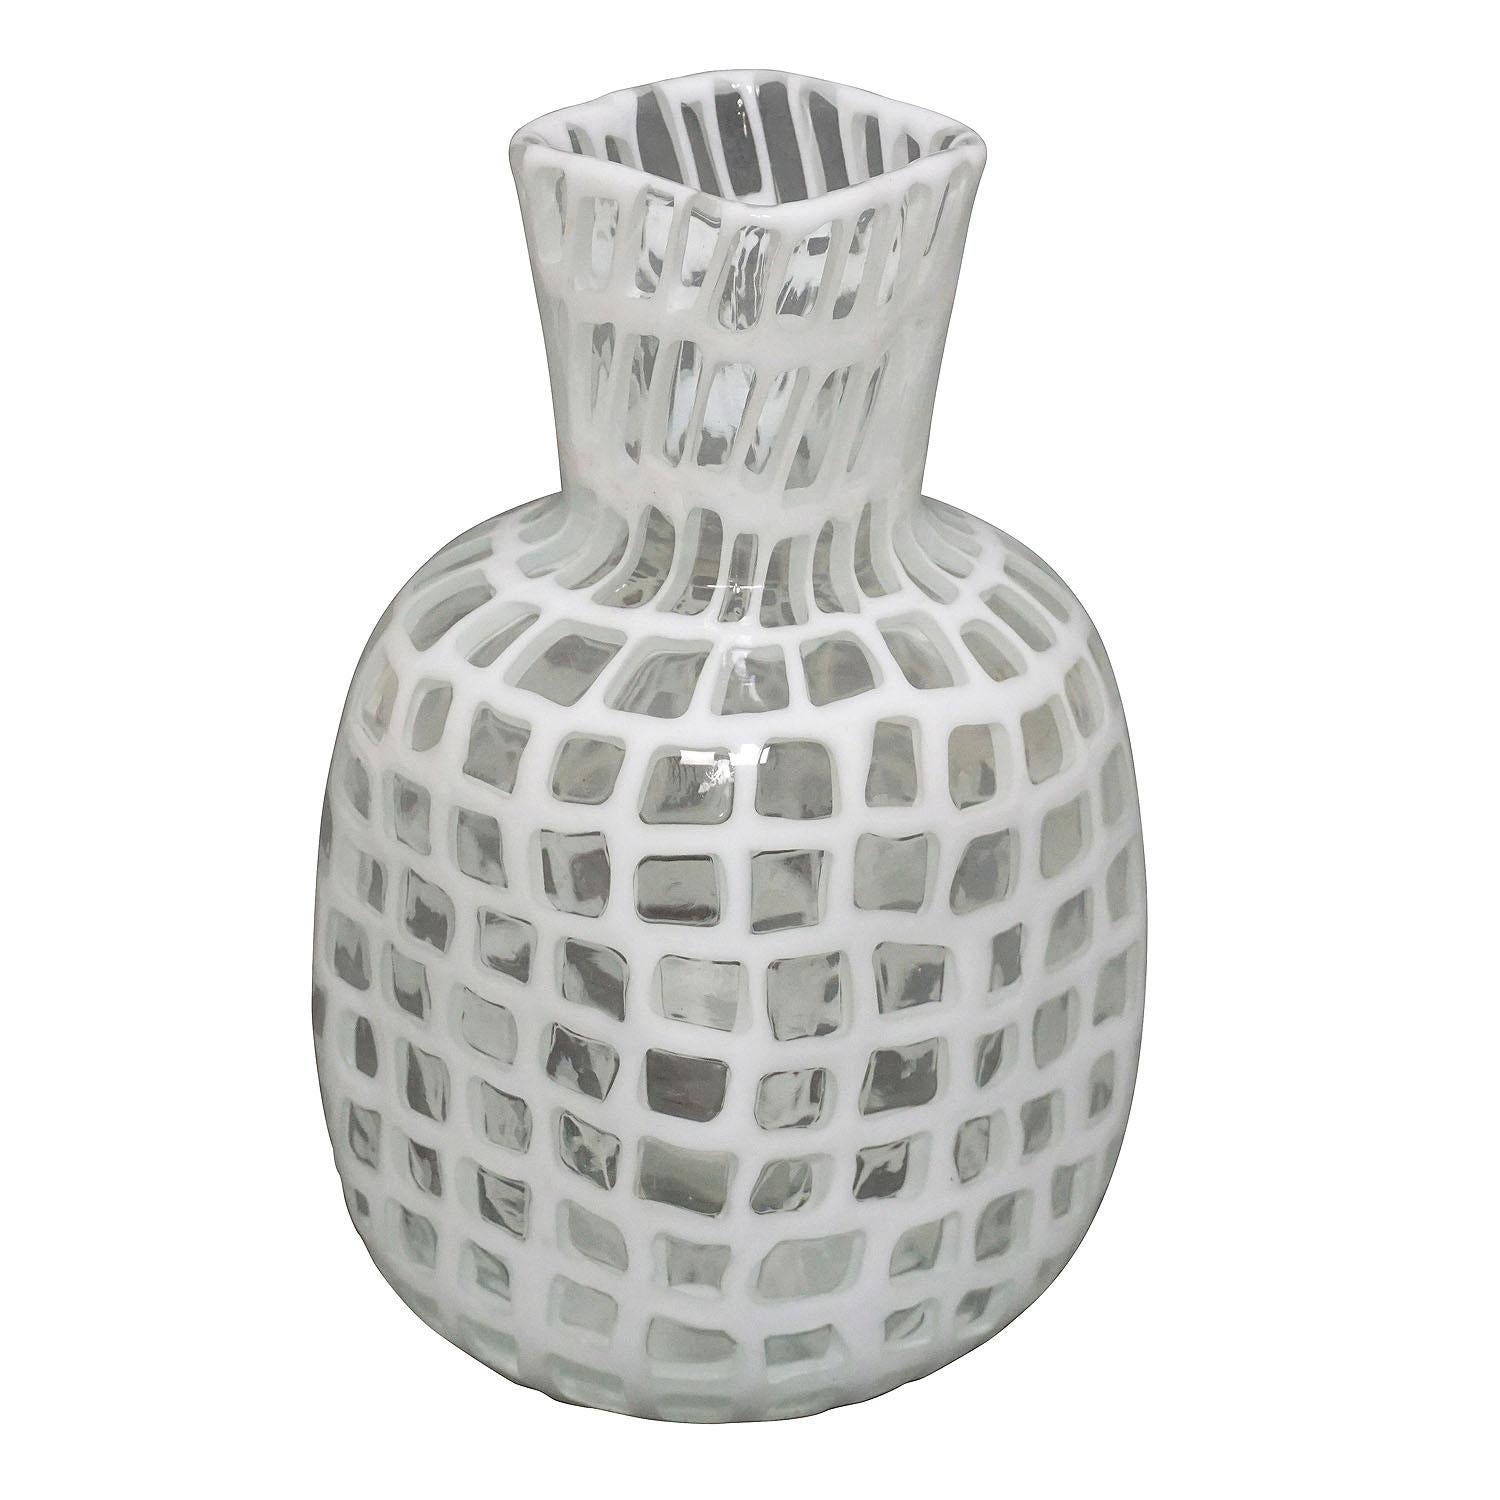 A white 'occhi' murrine vase designed by Tobia Scarpa in 1960, manufactured by Venini, Venice ca. 1960. Acid stamped signature 'venini Murano Italia' on the base (almost not visible).

In 1921 Paolo Venini and Giacomo Cappellin founded a company